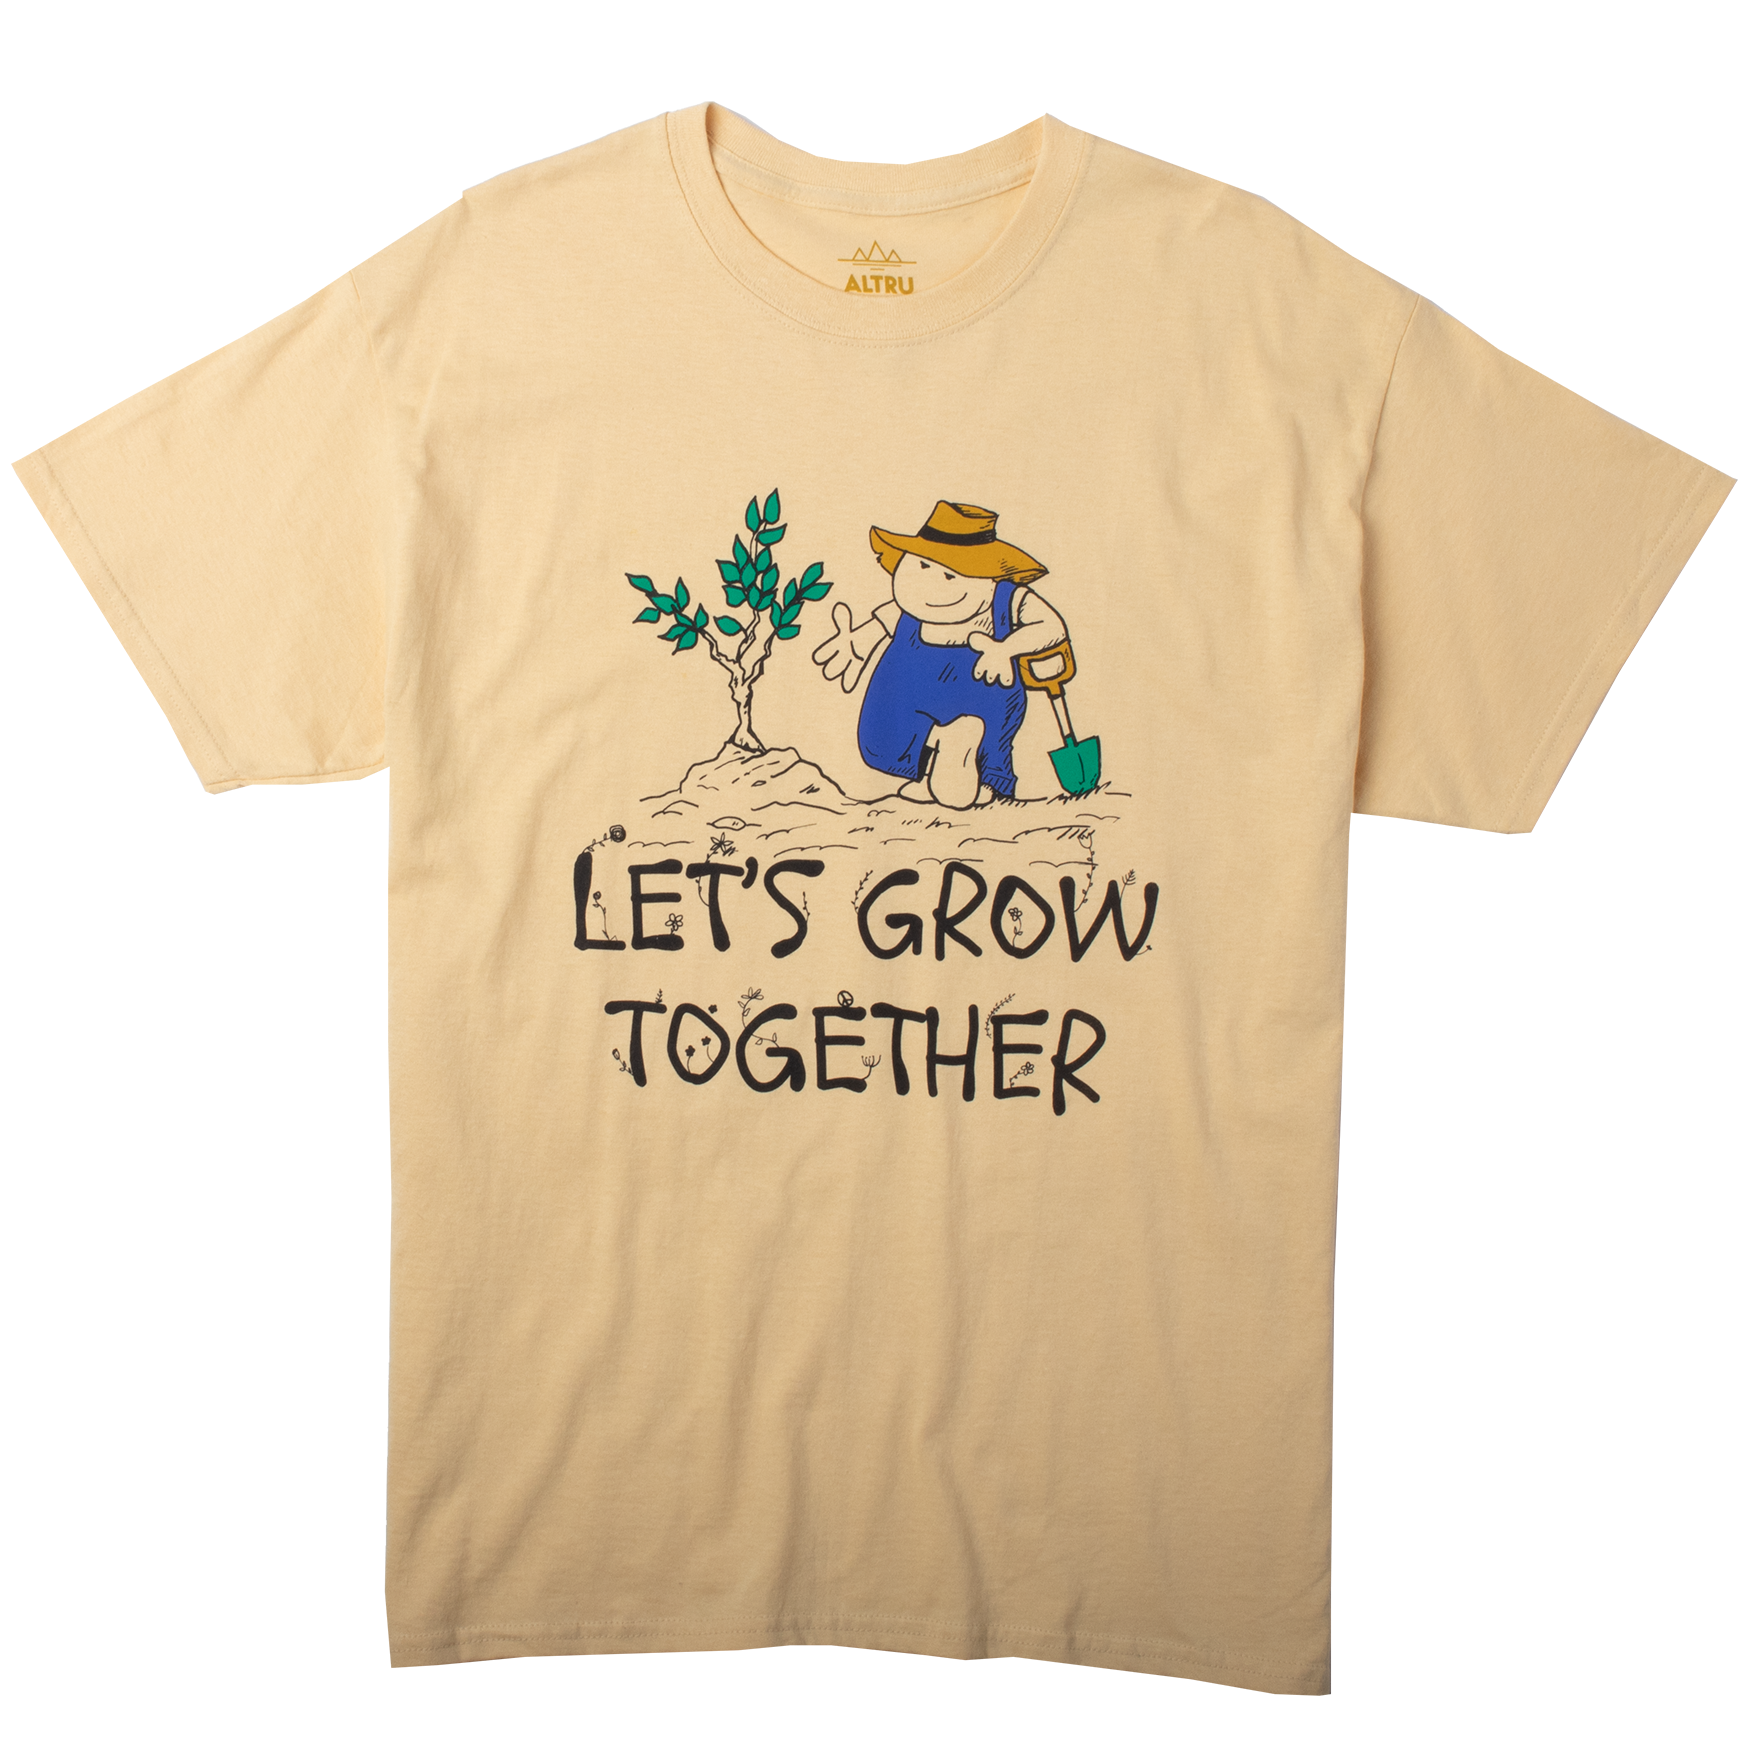 Let's Grow Together tee shirt